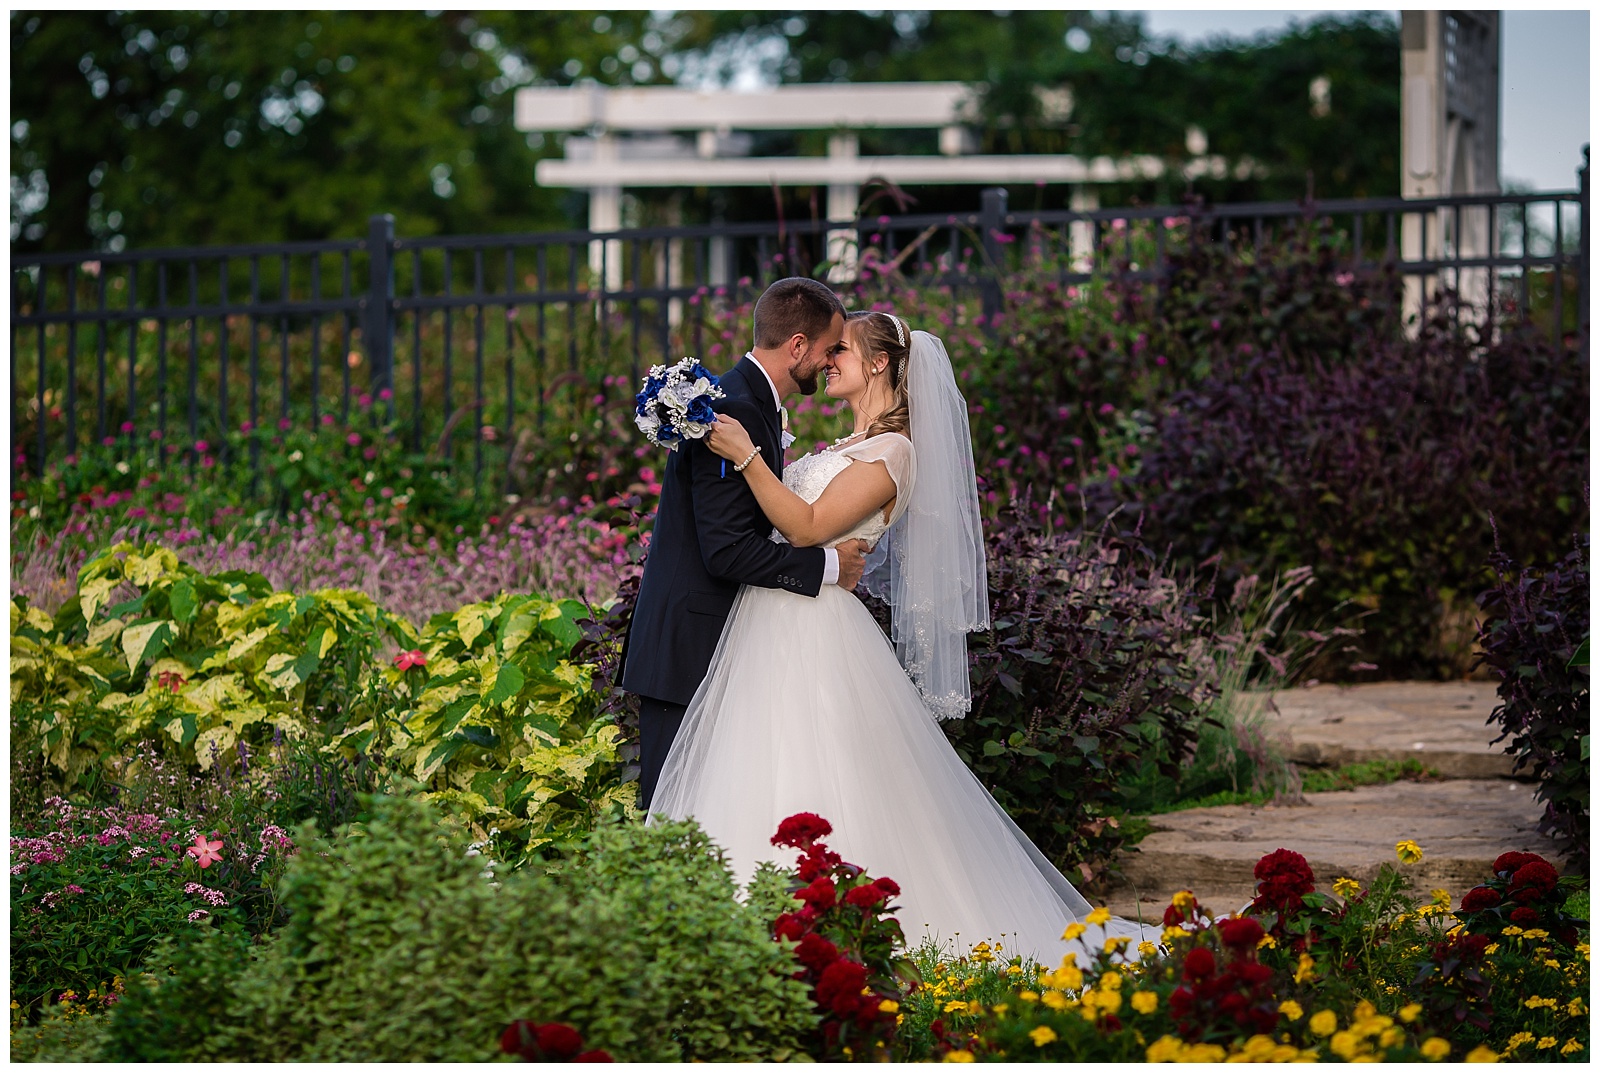 Wedding photography at Gage Park in Topeka, Kansas.